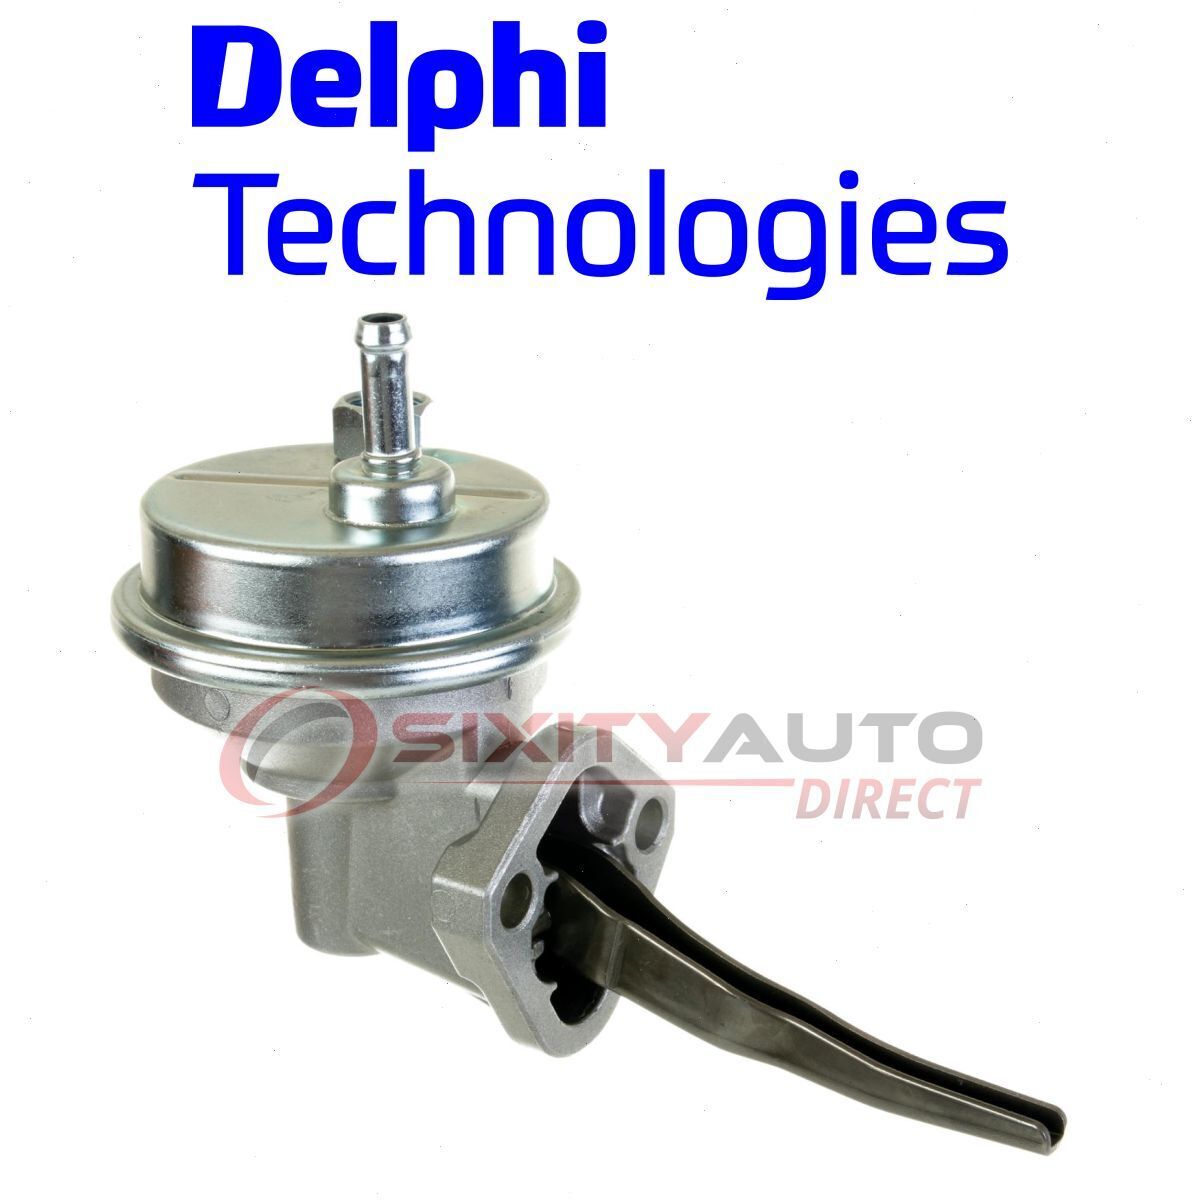 Delphi Mechanical Fuel Pump for 1977-1981 Oldsmobile Cutlass 3.8L V6 Air uw